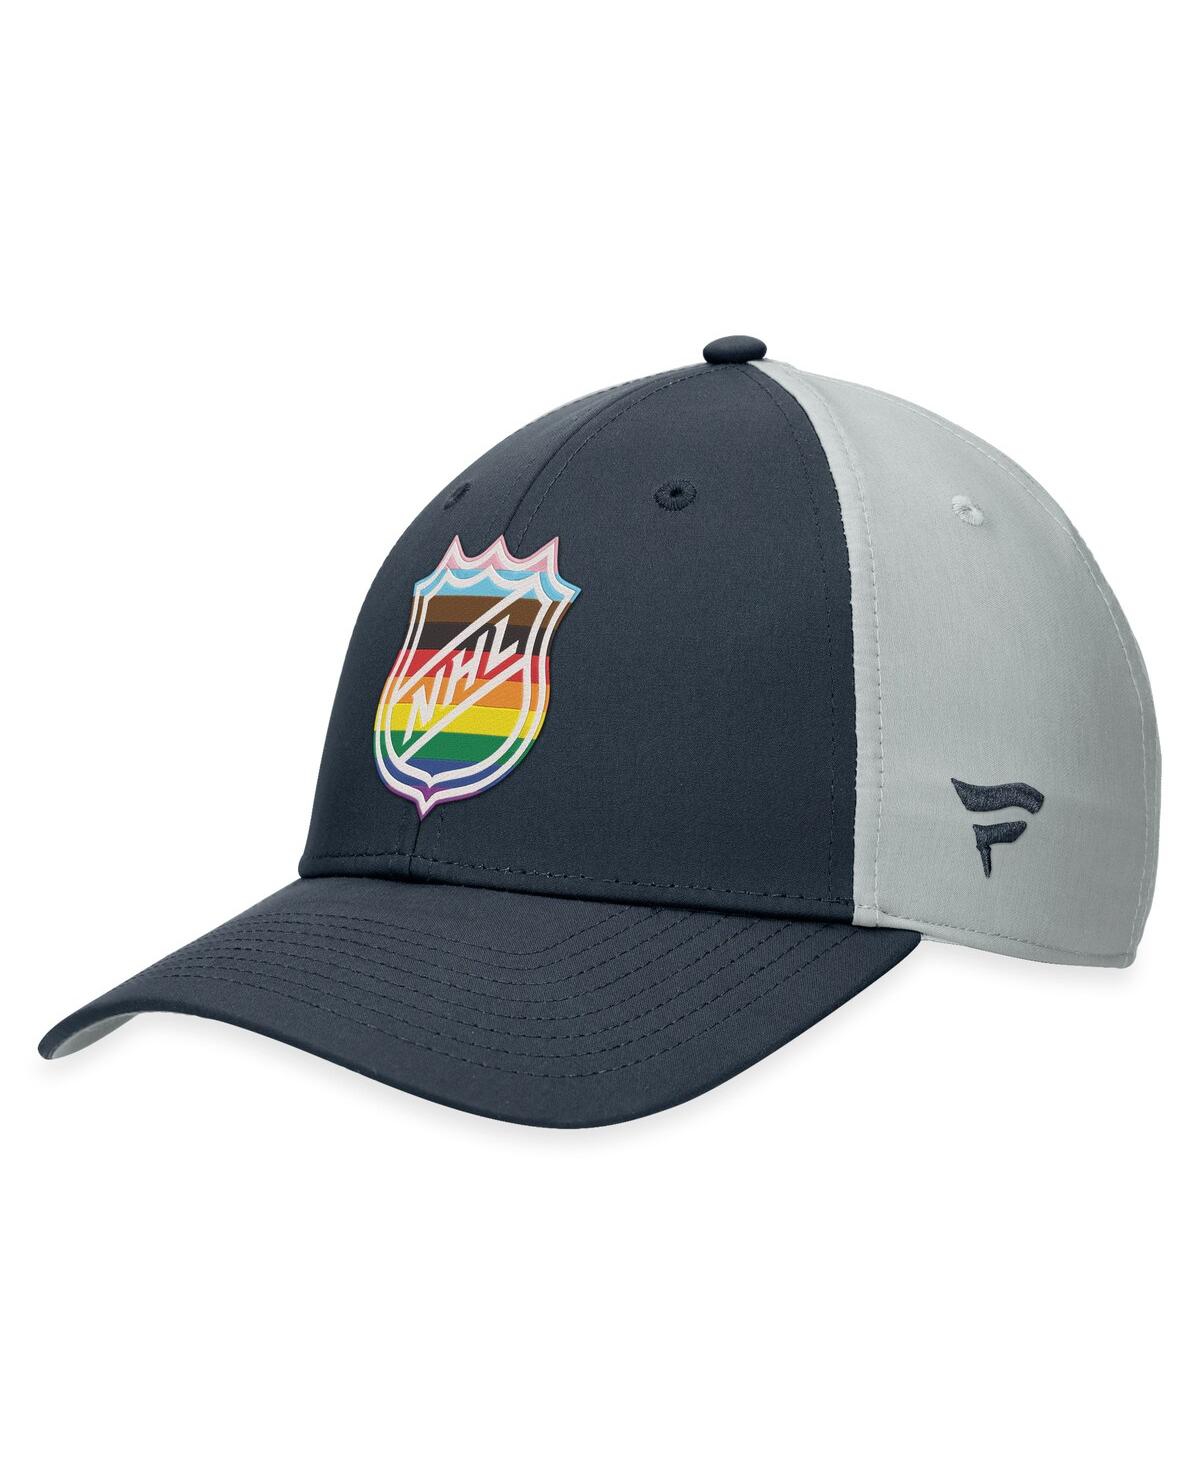 Fanatics Men's  Charcoal Nhl Authentic Pro Pride Snapback Hat